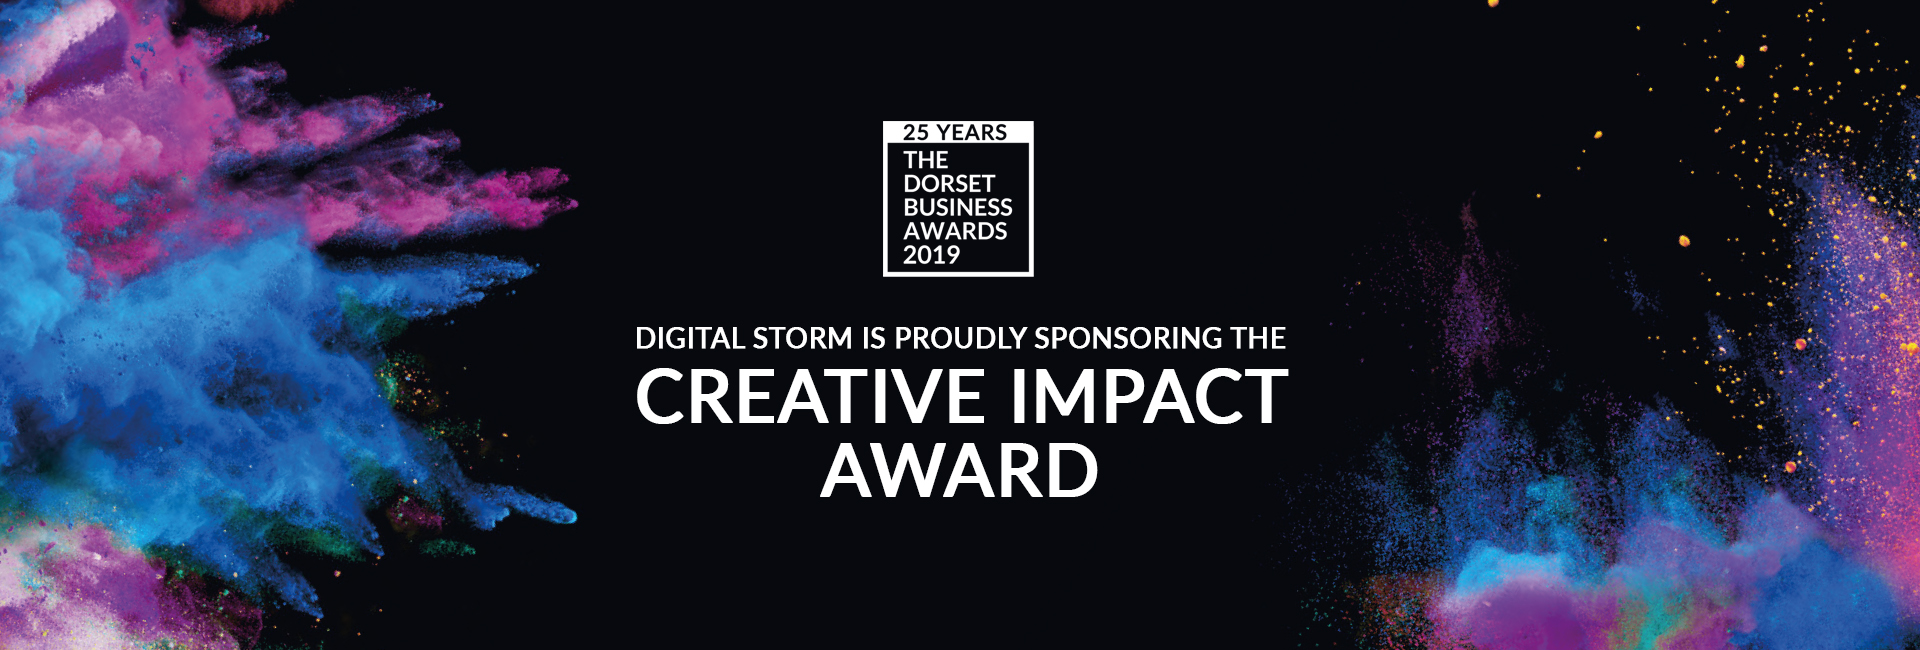 Digital Storm & Liz Lean PR sponsor 2019’s Creative Impact Award for the Dorset Business Awards